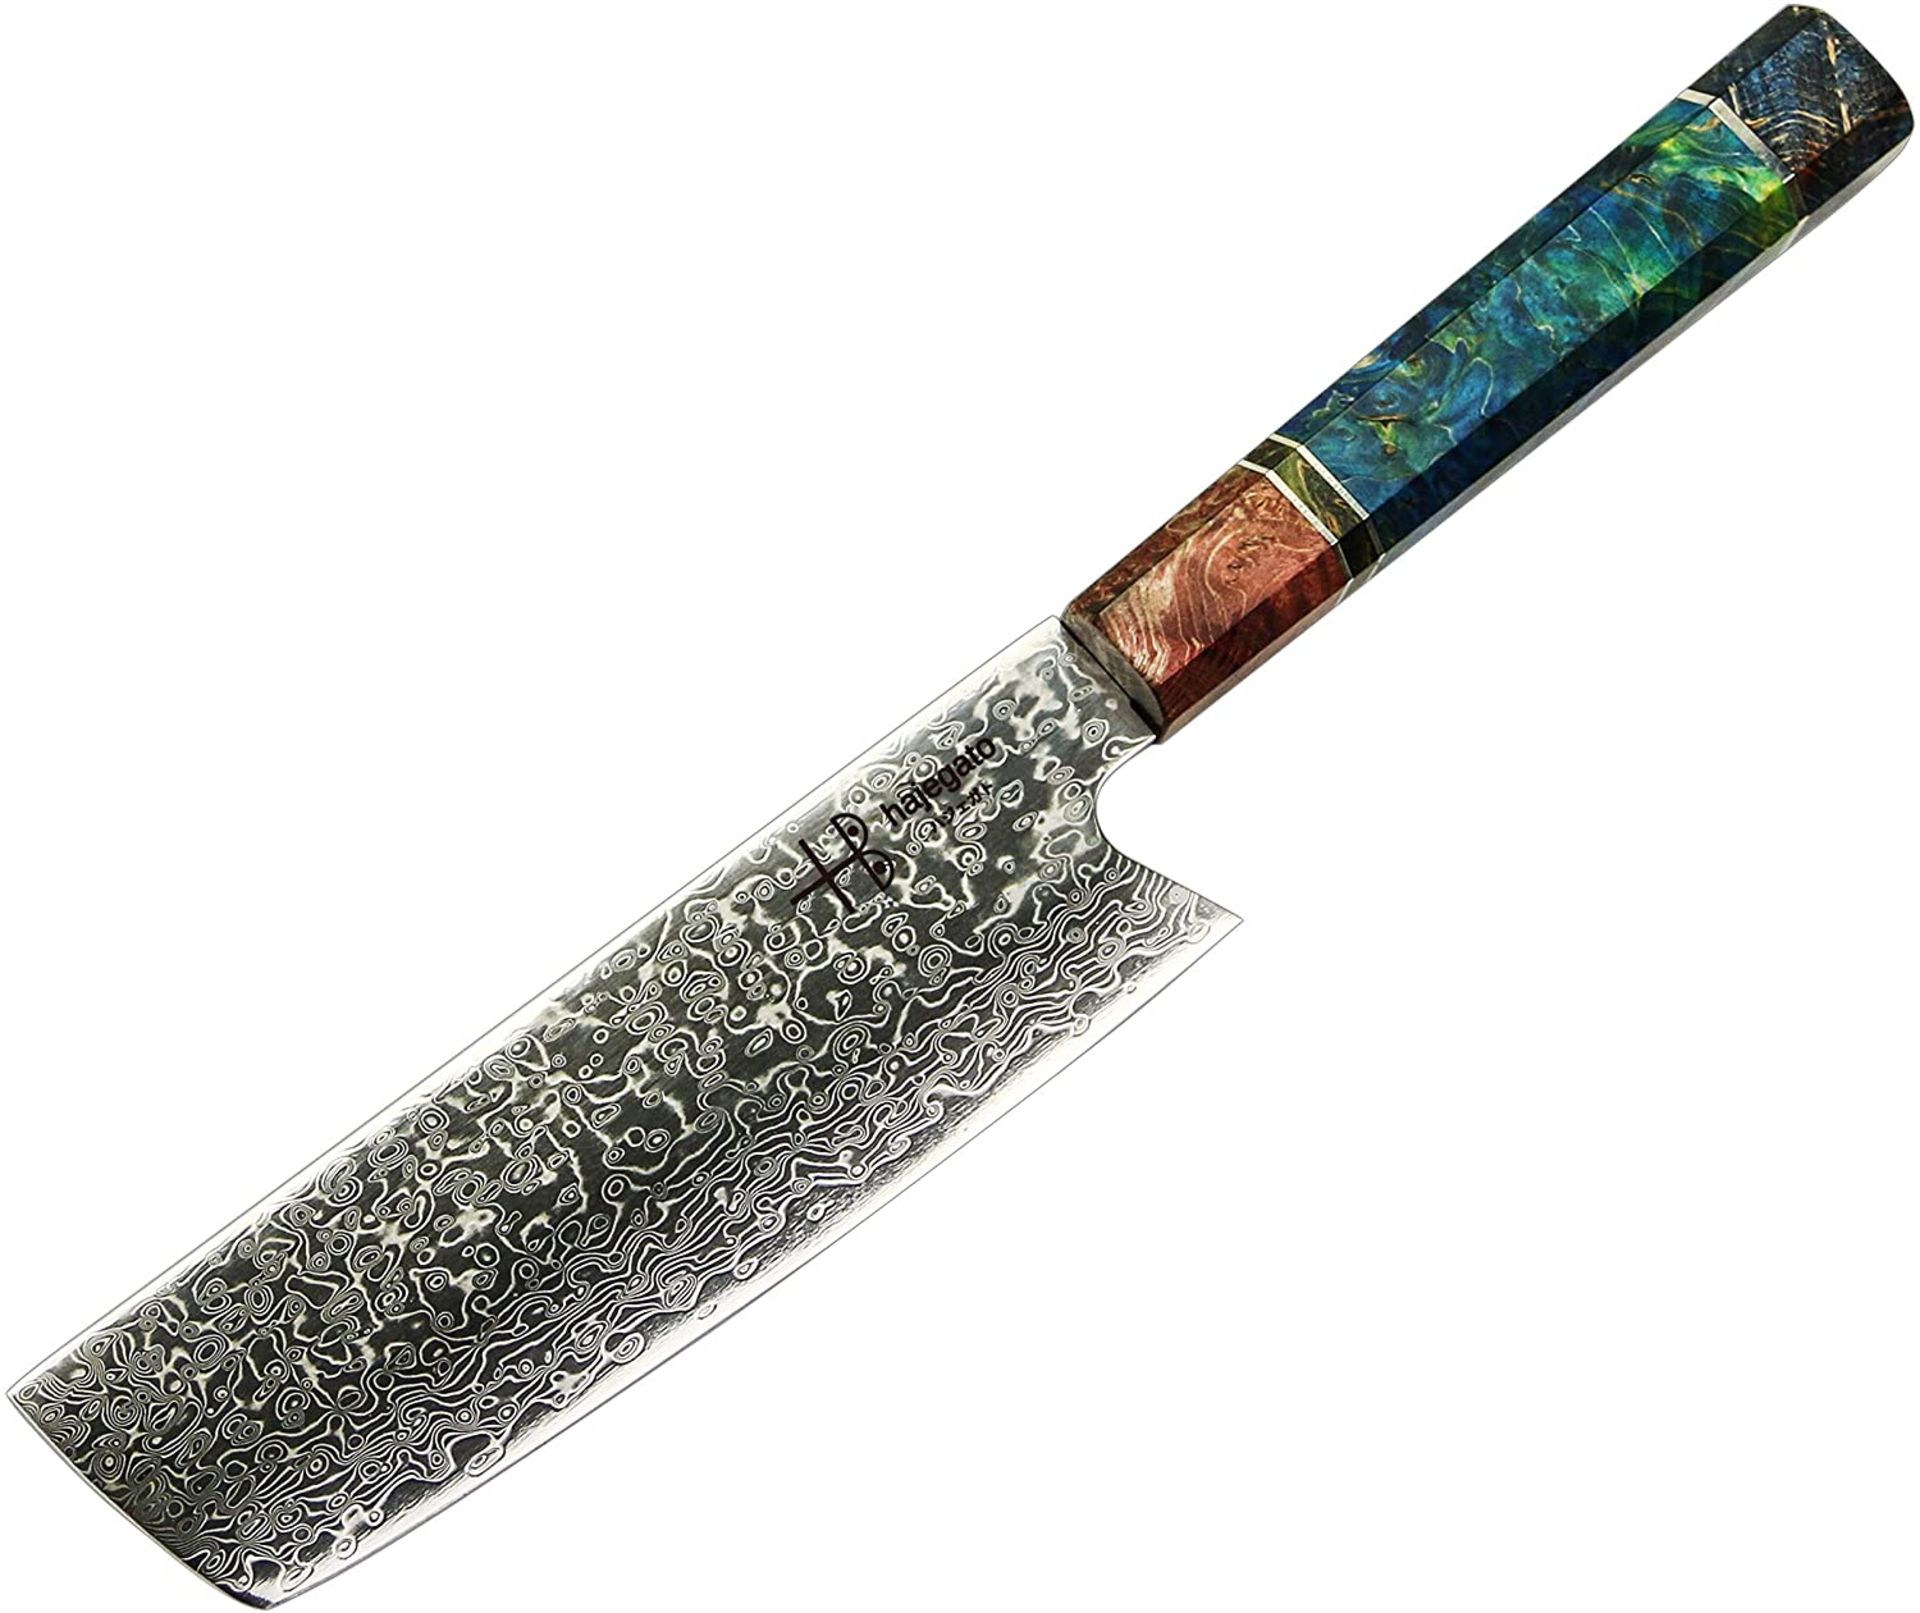 Hajegato Nakiri damascus chefs knife in presentation box RRP £111 - Image 2 of 2